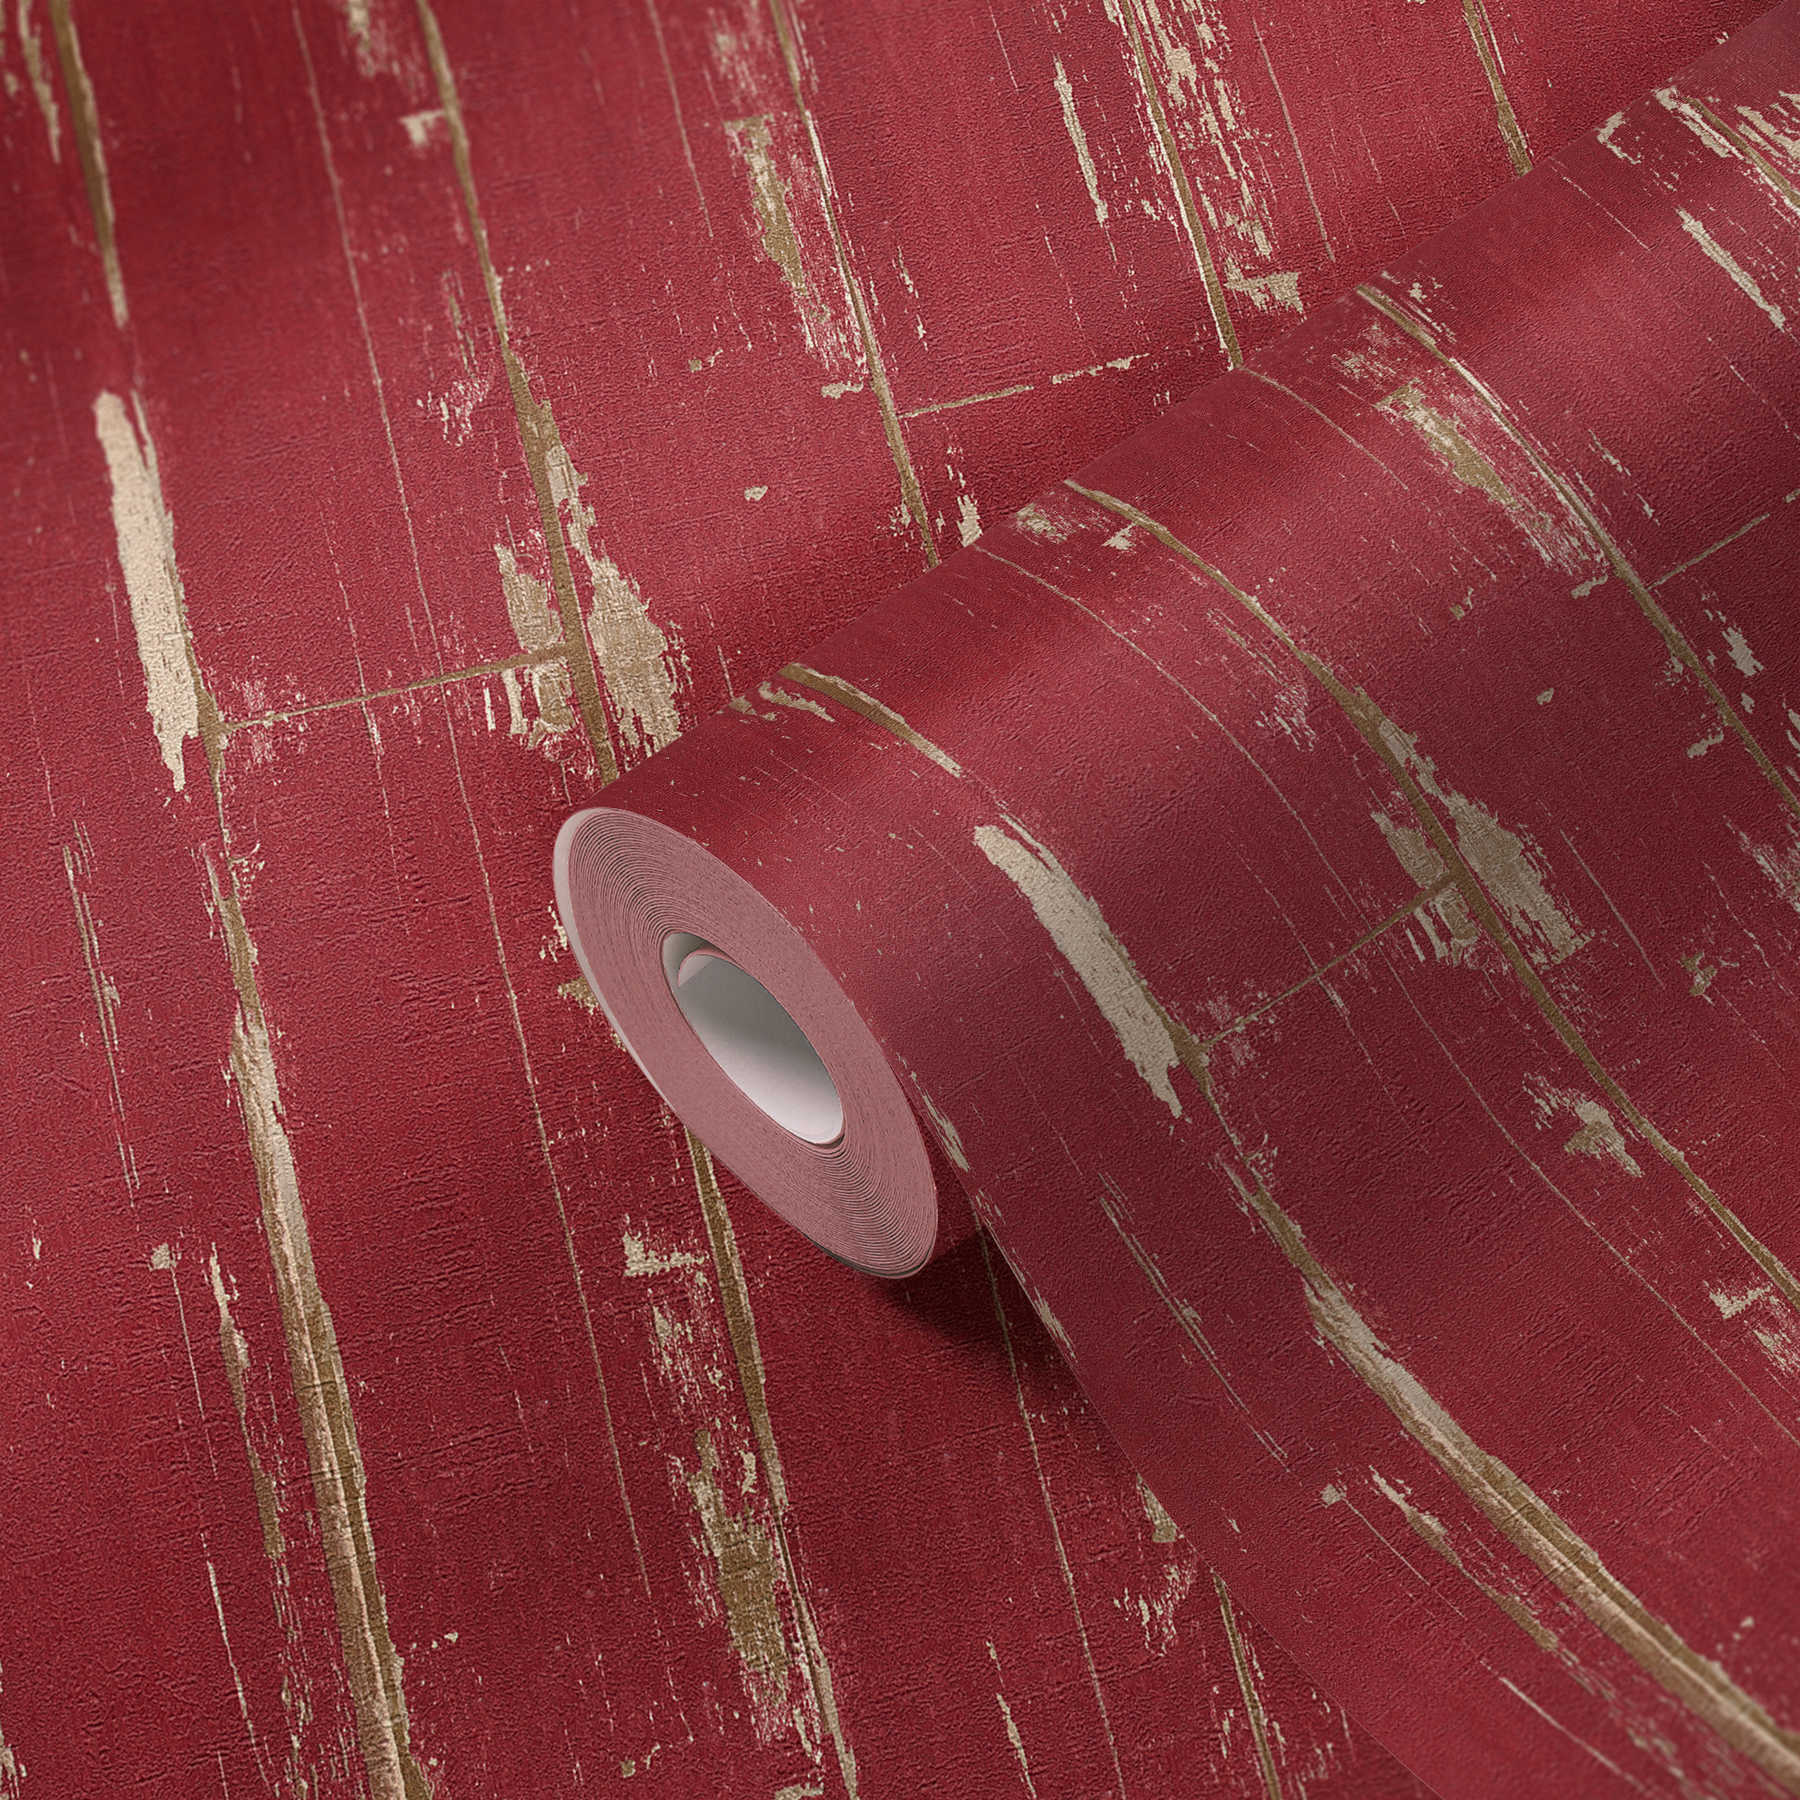             Houten behang met planken, vintage look & used look - rood
        